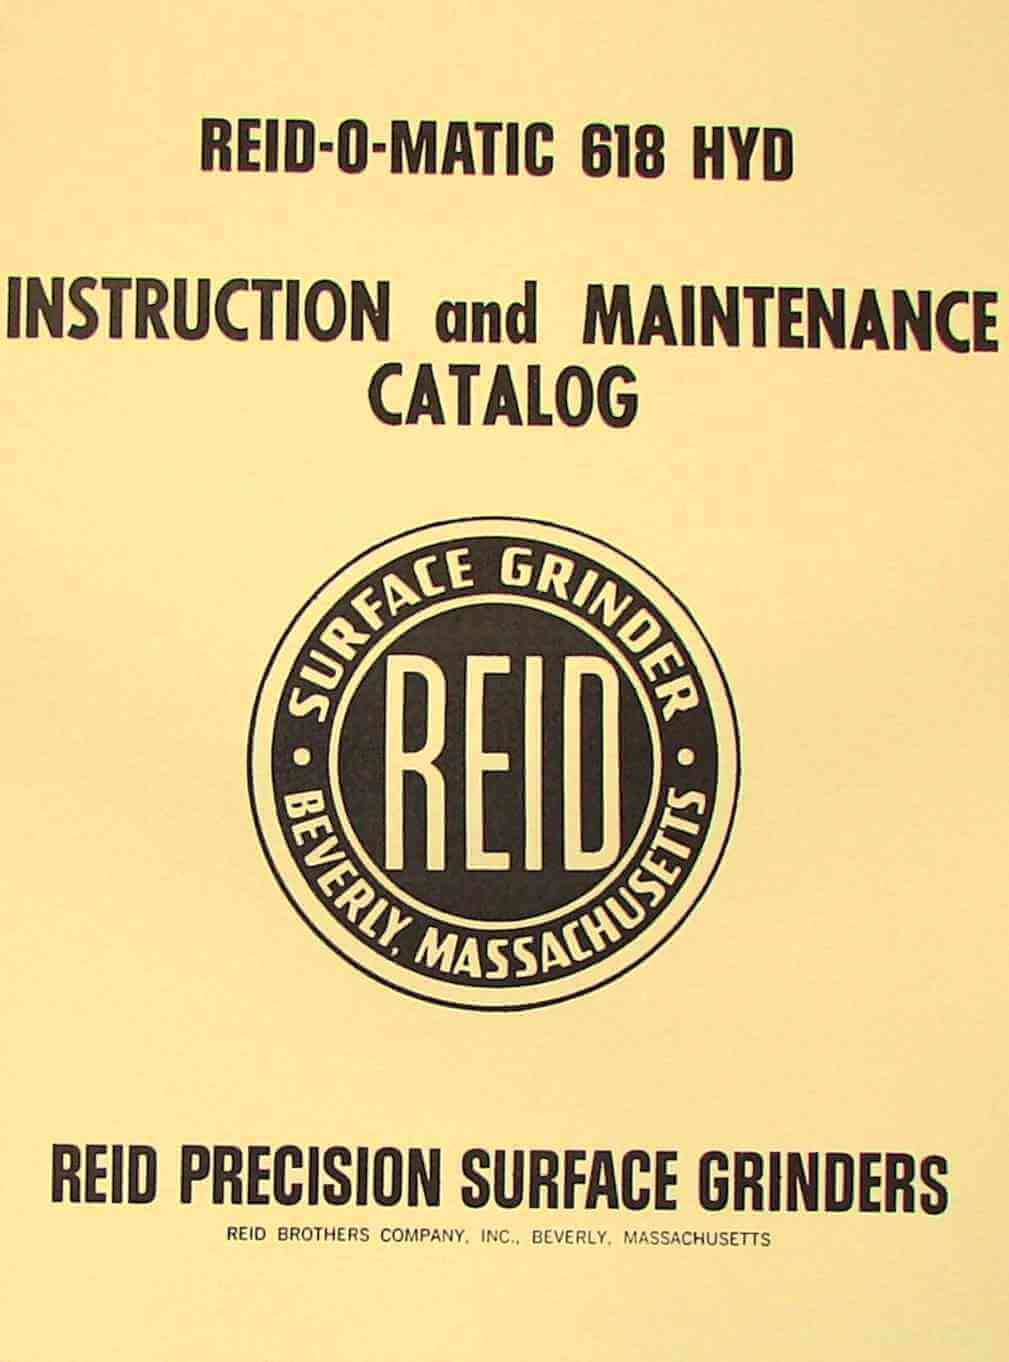 REID-O-MATIC 618 HYD Hyrdraulic Surface Grinder Instructions & Parts Manual 0948 